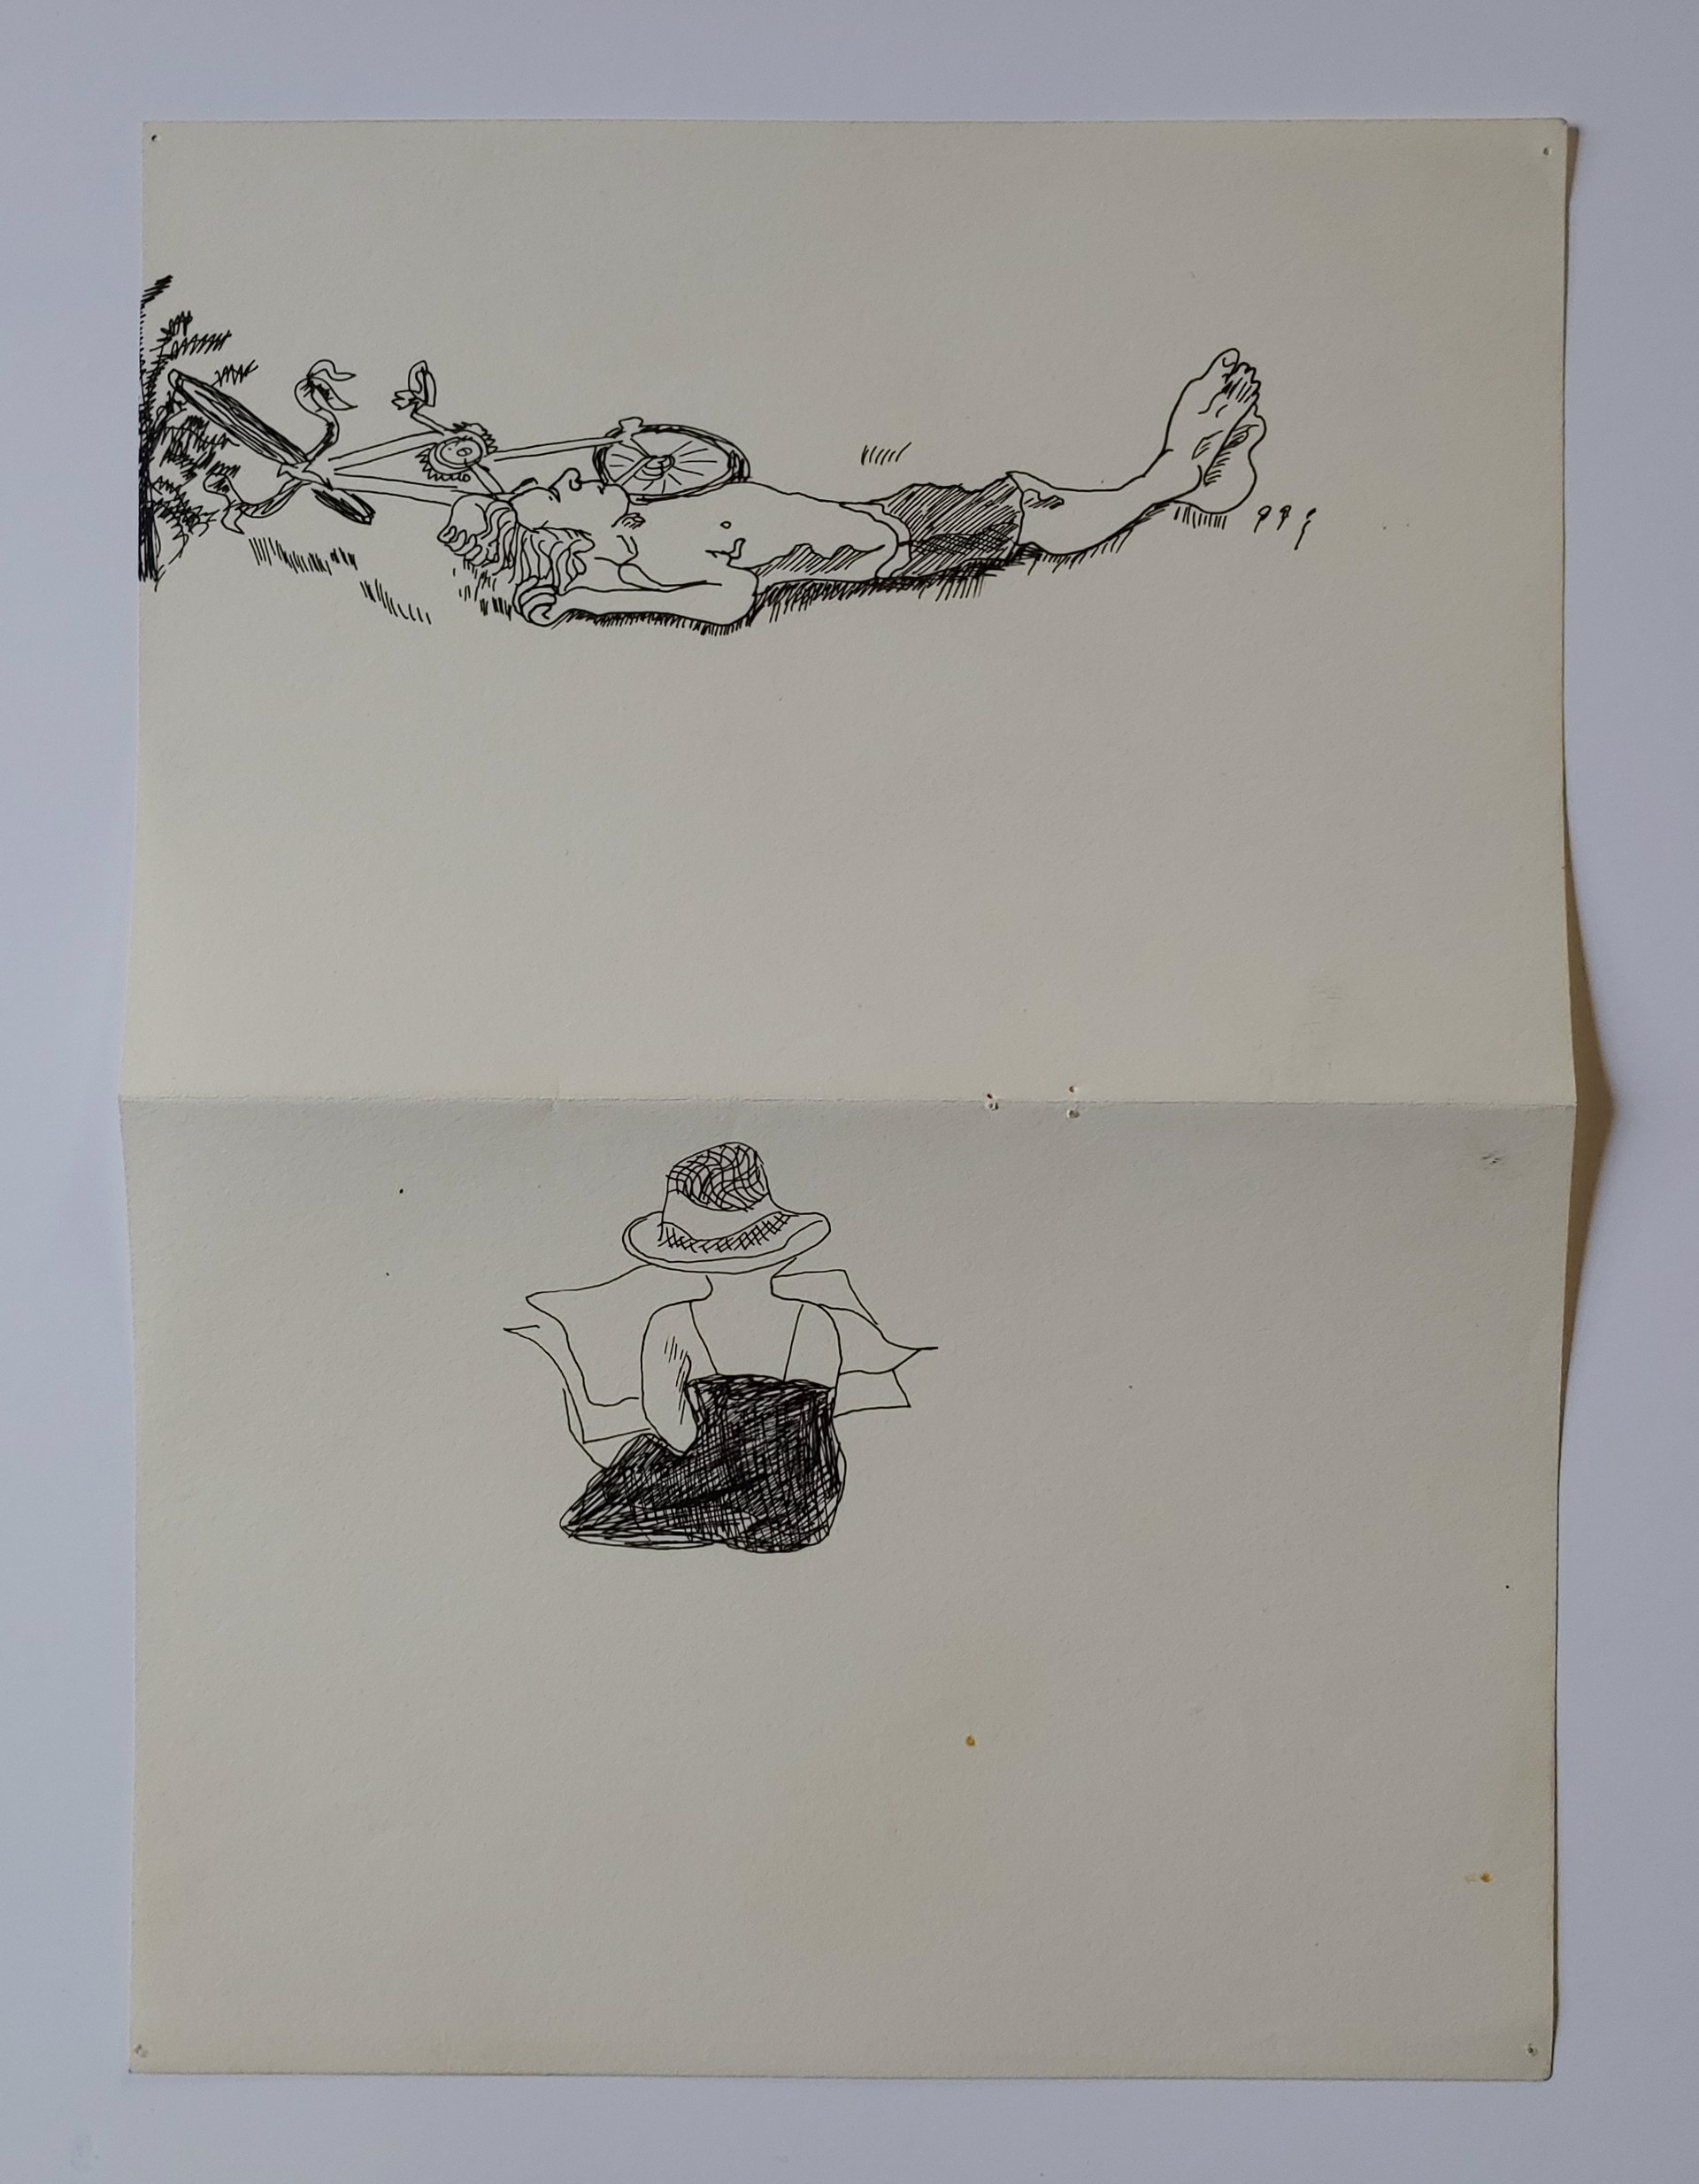 Two Figures Sketch by David Amdur